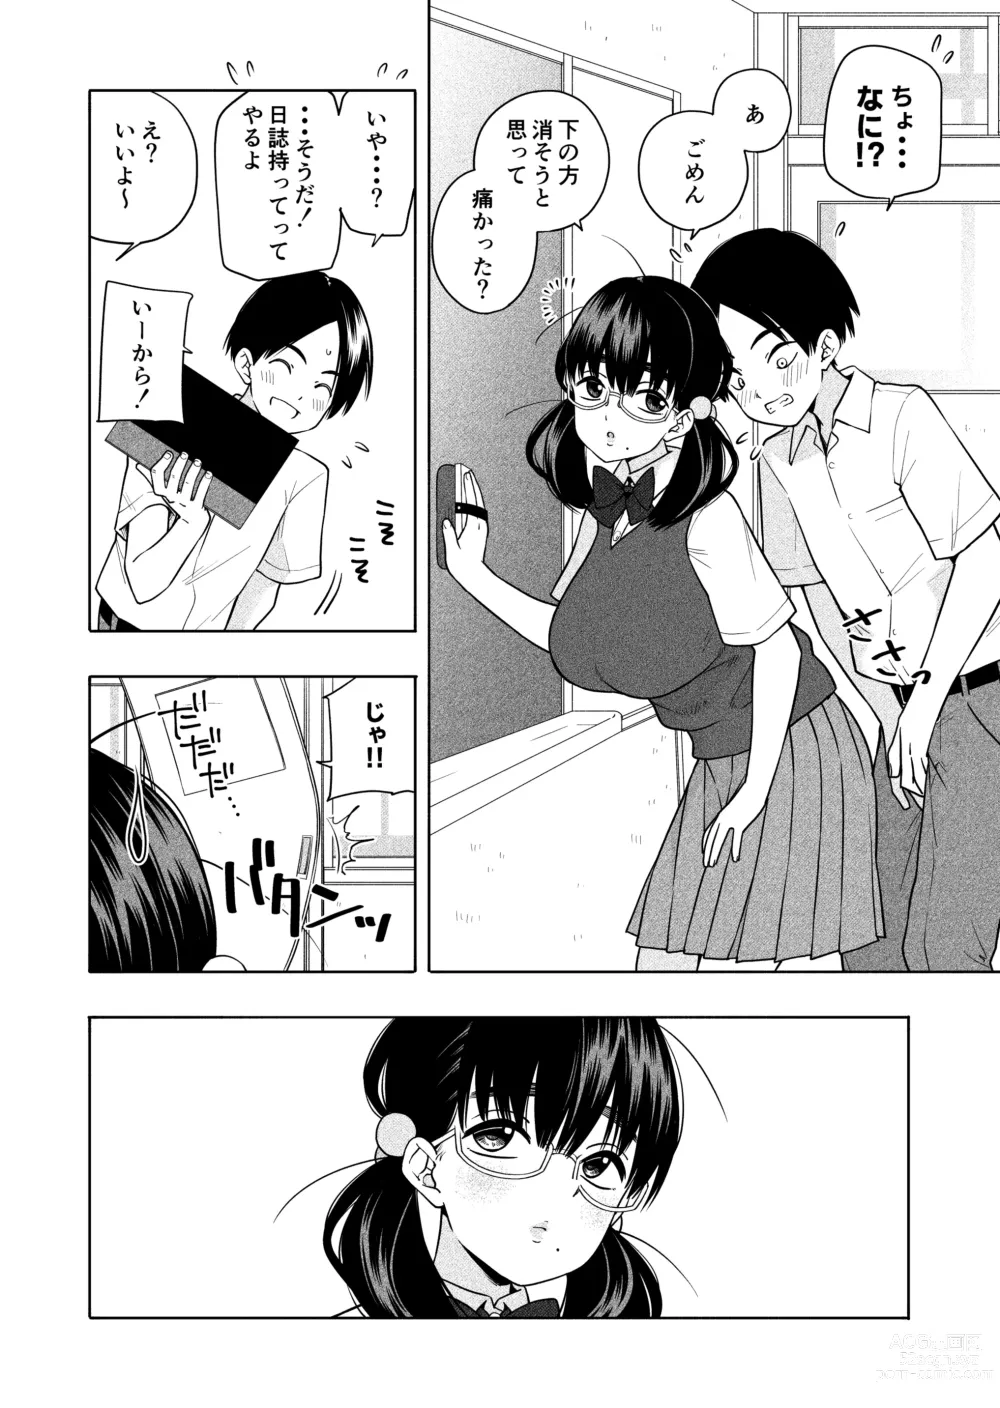 Page 8 of doujinshi Hoshikute, Motomete.